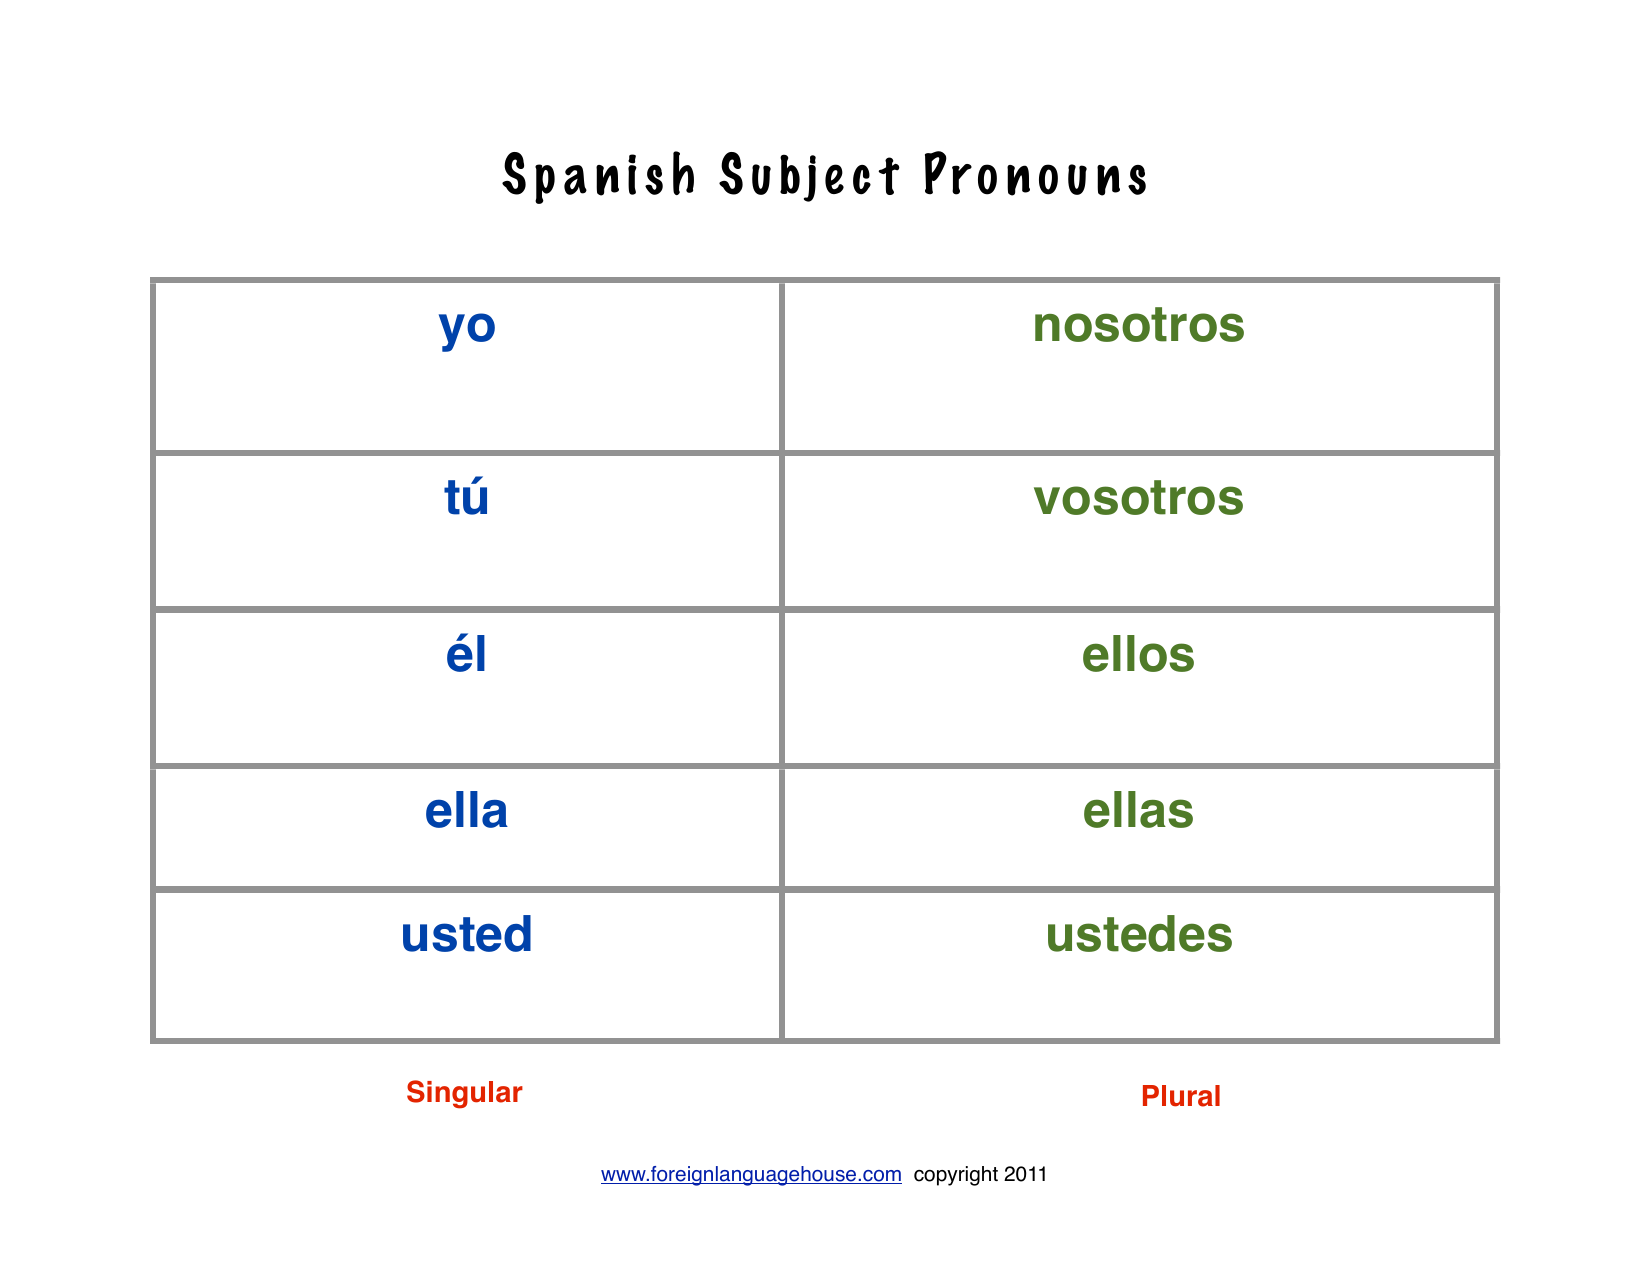 subject-pronouns-in-spanish-chart-sharedoc